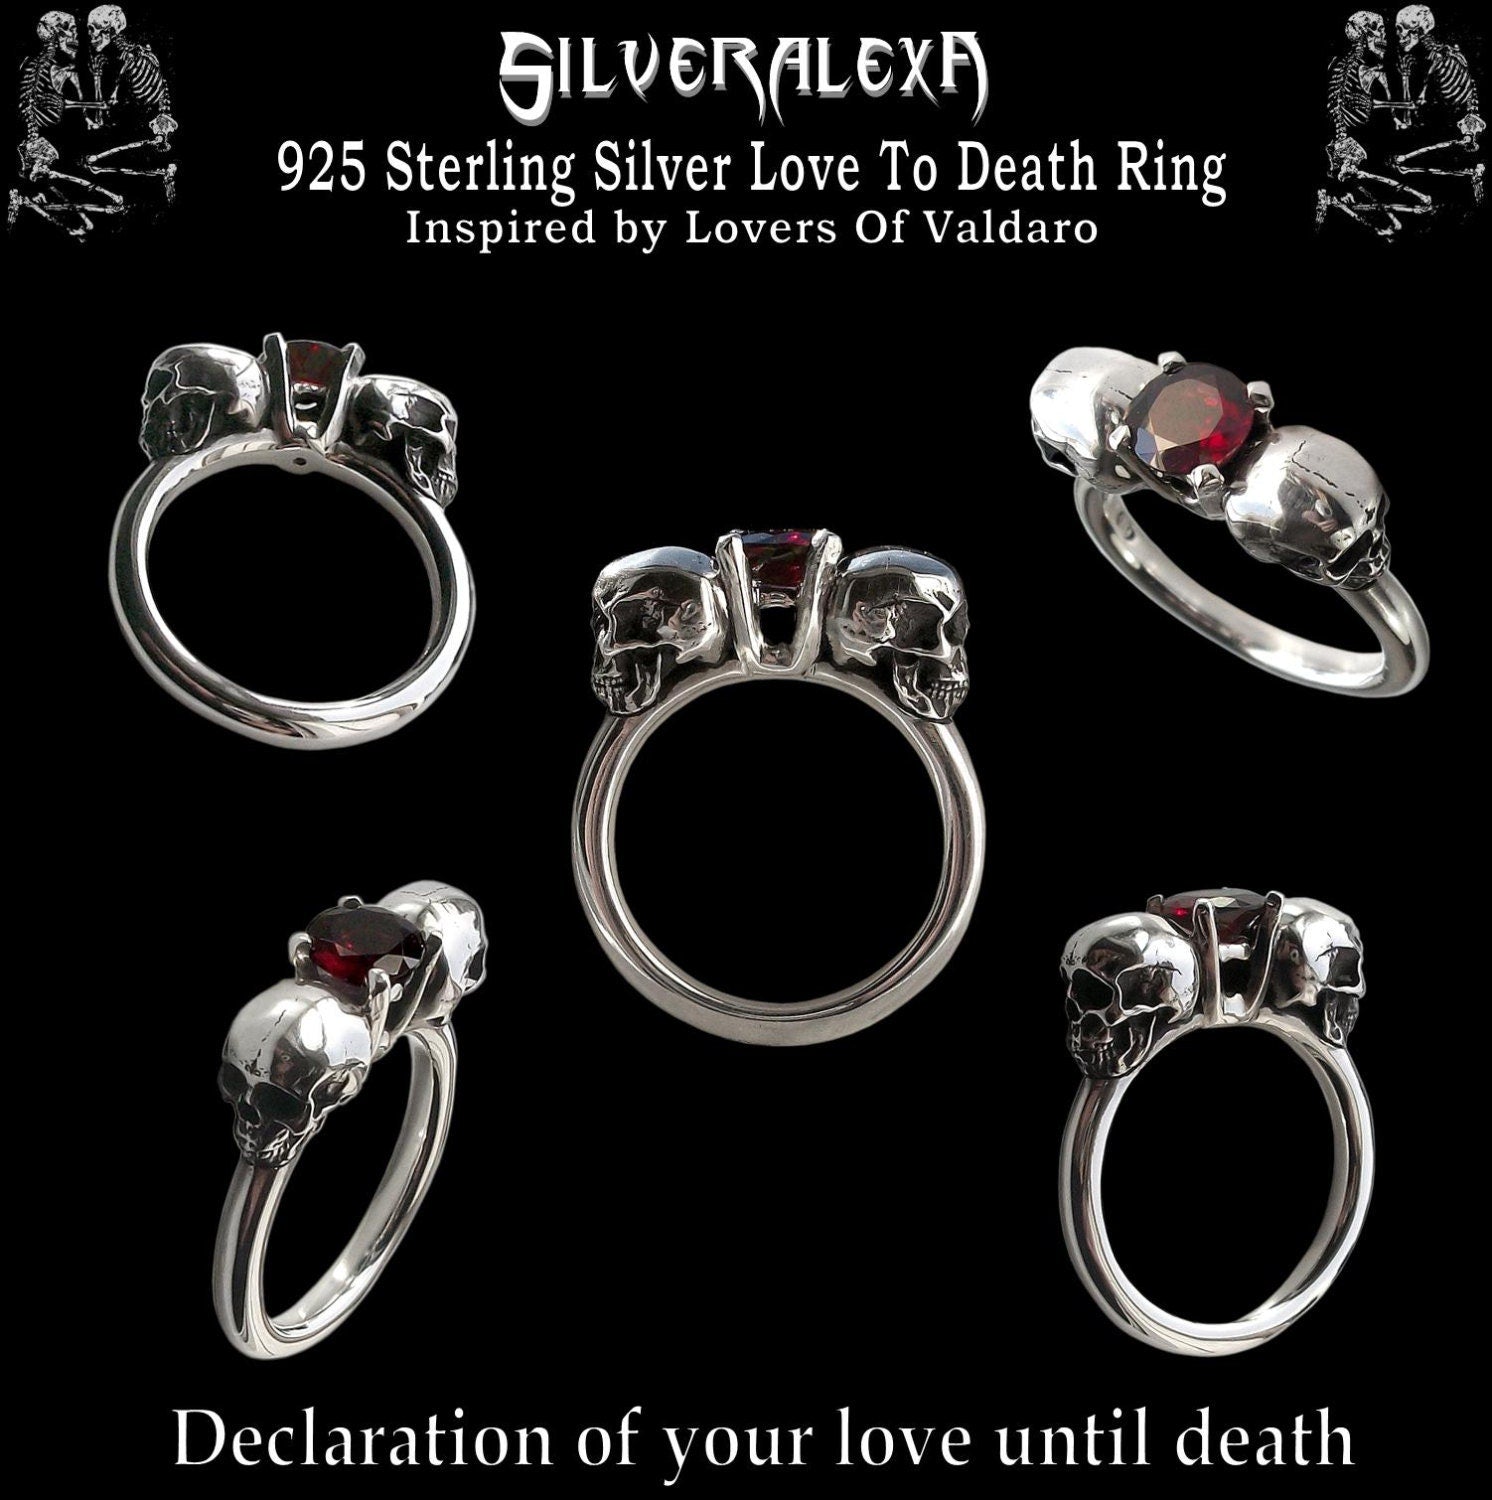 Skull engagement ring - Sterling Silver Dark Gothic Skull Engagement Ring with Red Garnet - Love to Death Ring Inspired by Lovers Of Valdaro